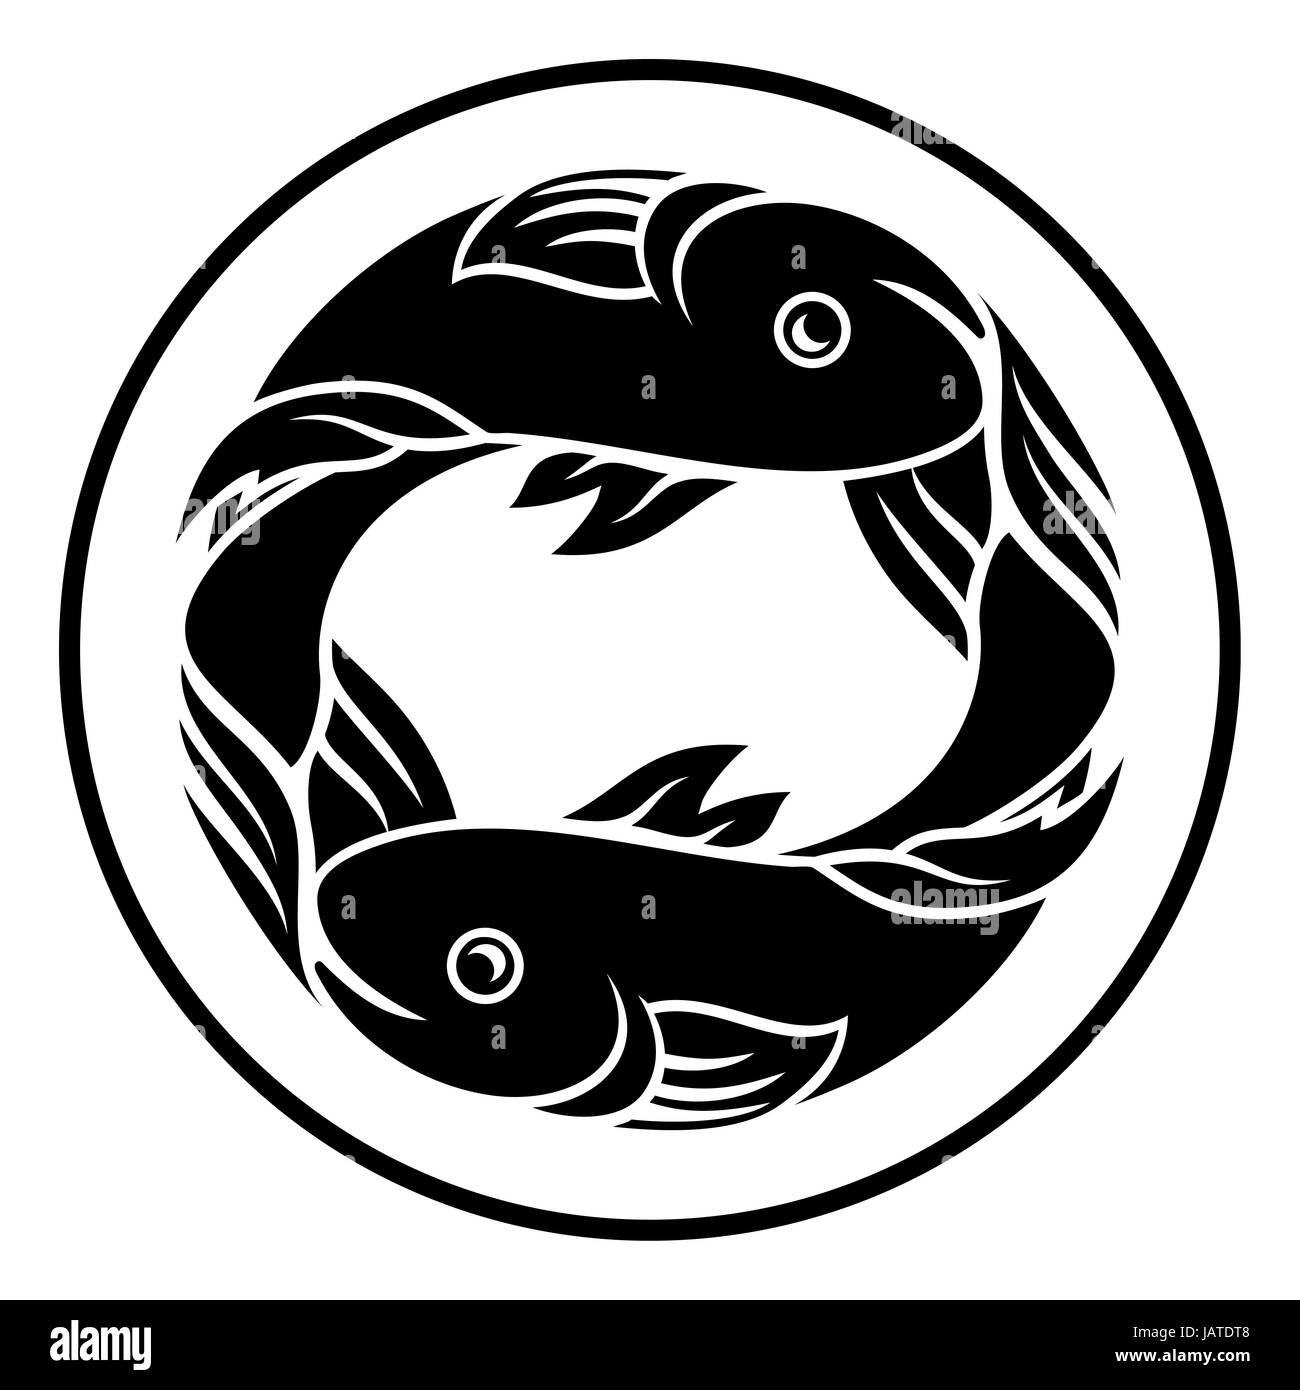 Astrology horoscope zodiac signs, circular Pisces fish symbol Stock Photo